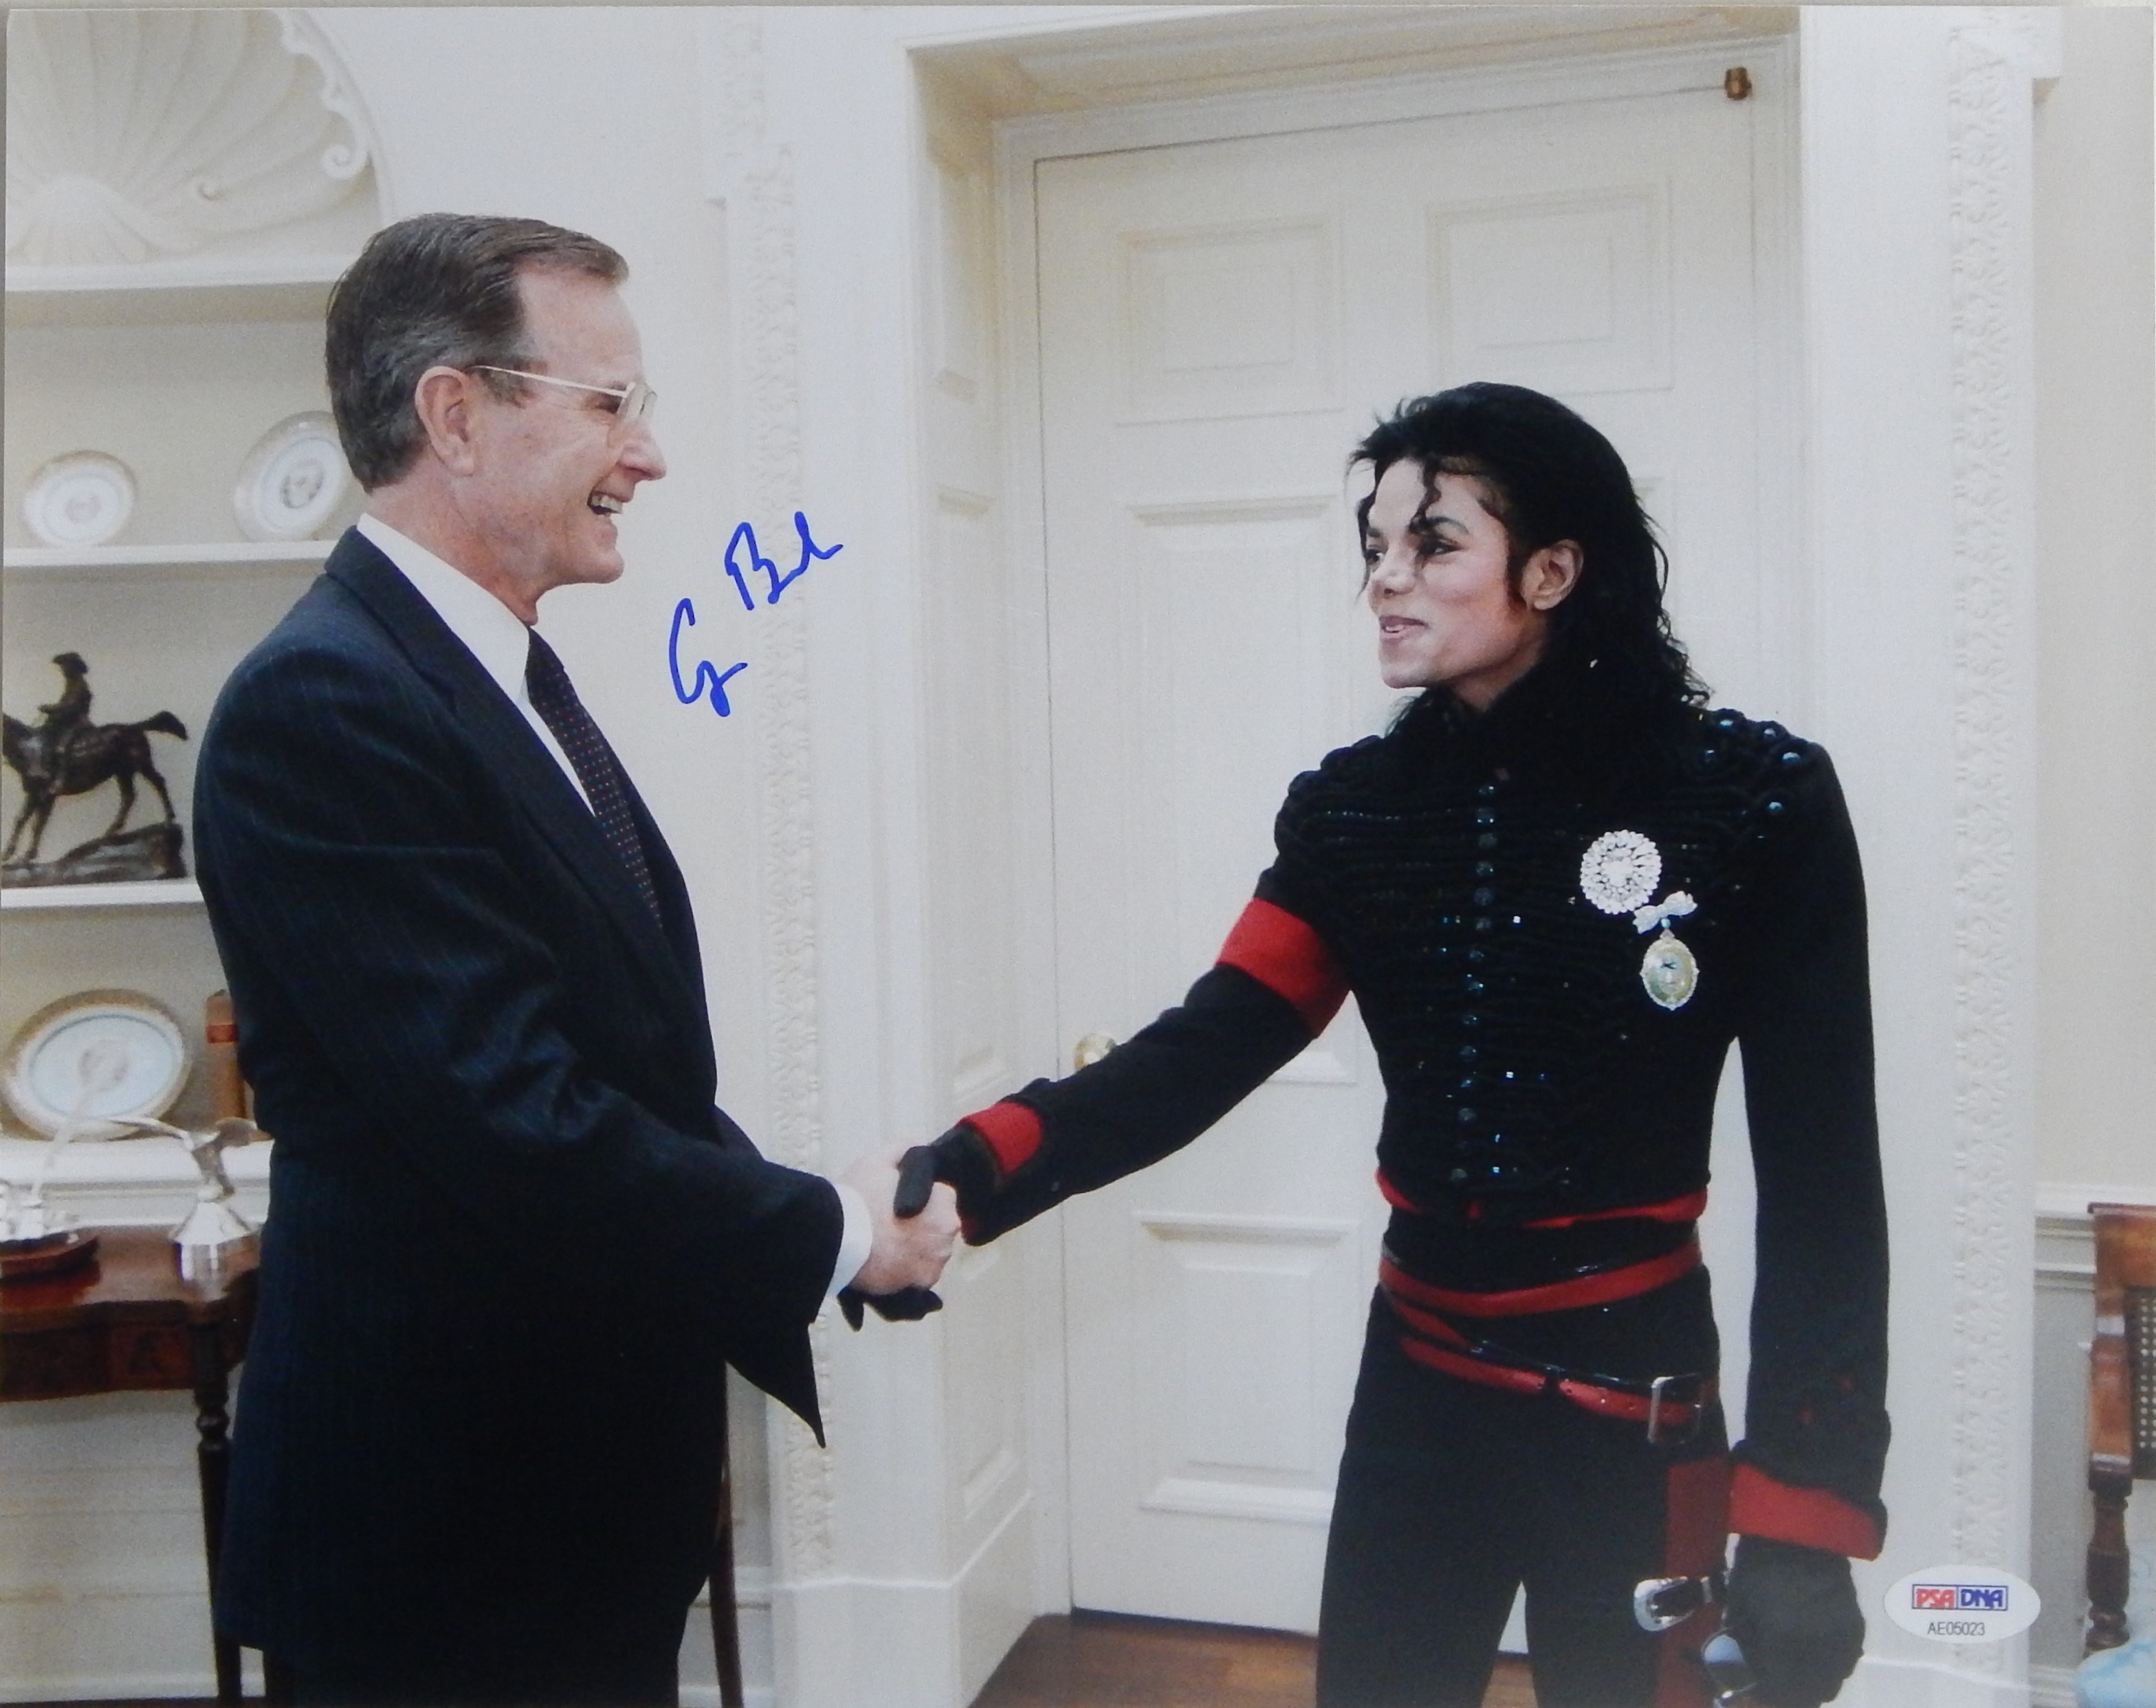 - President George HW Bush 16x20" Signed Photo Meeting Michael Jackson (PSA/DNA)